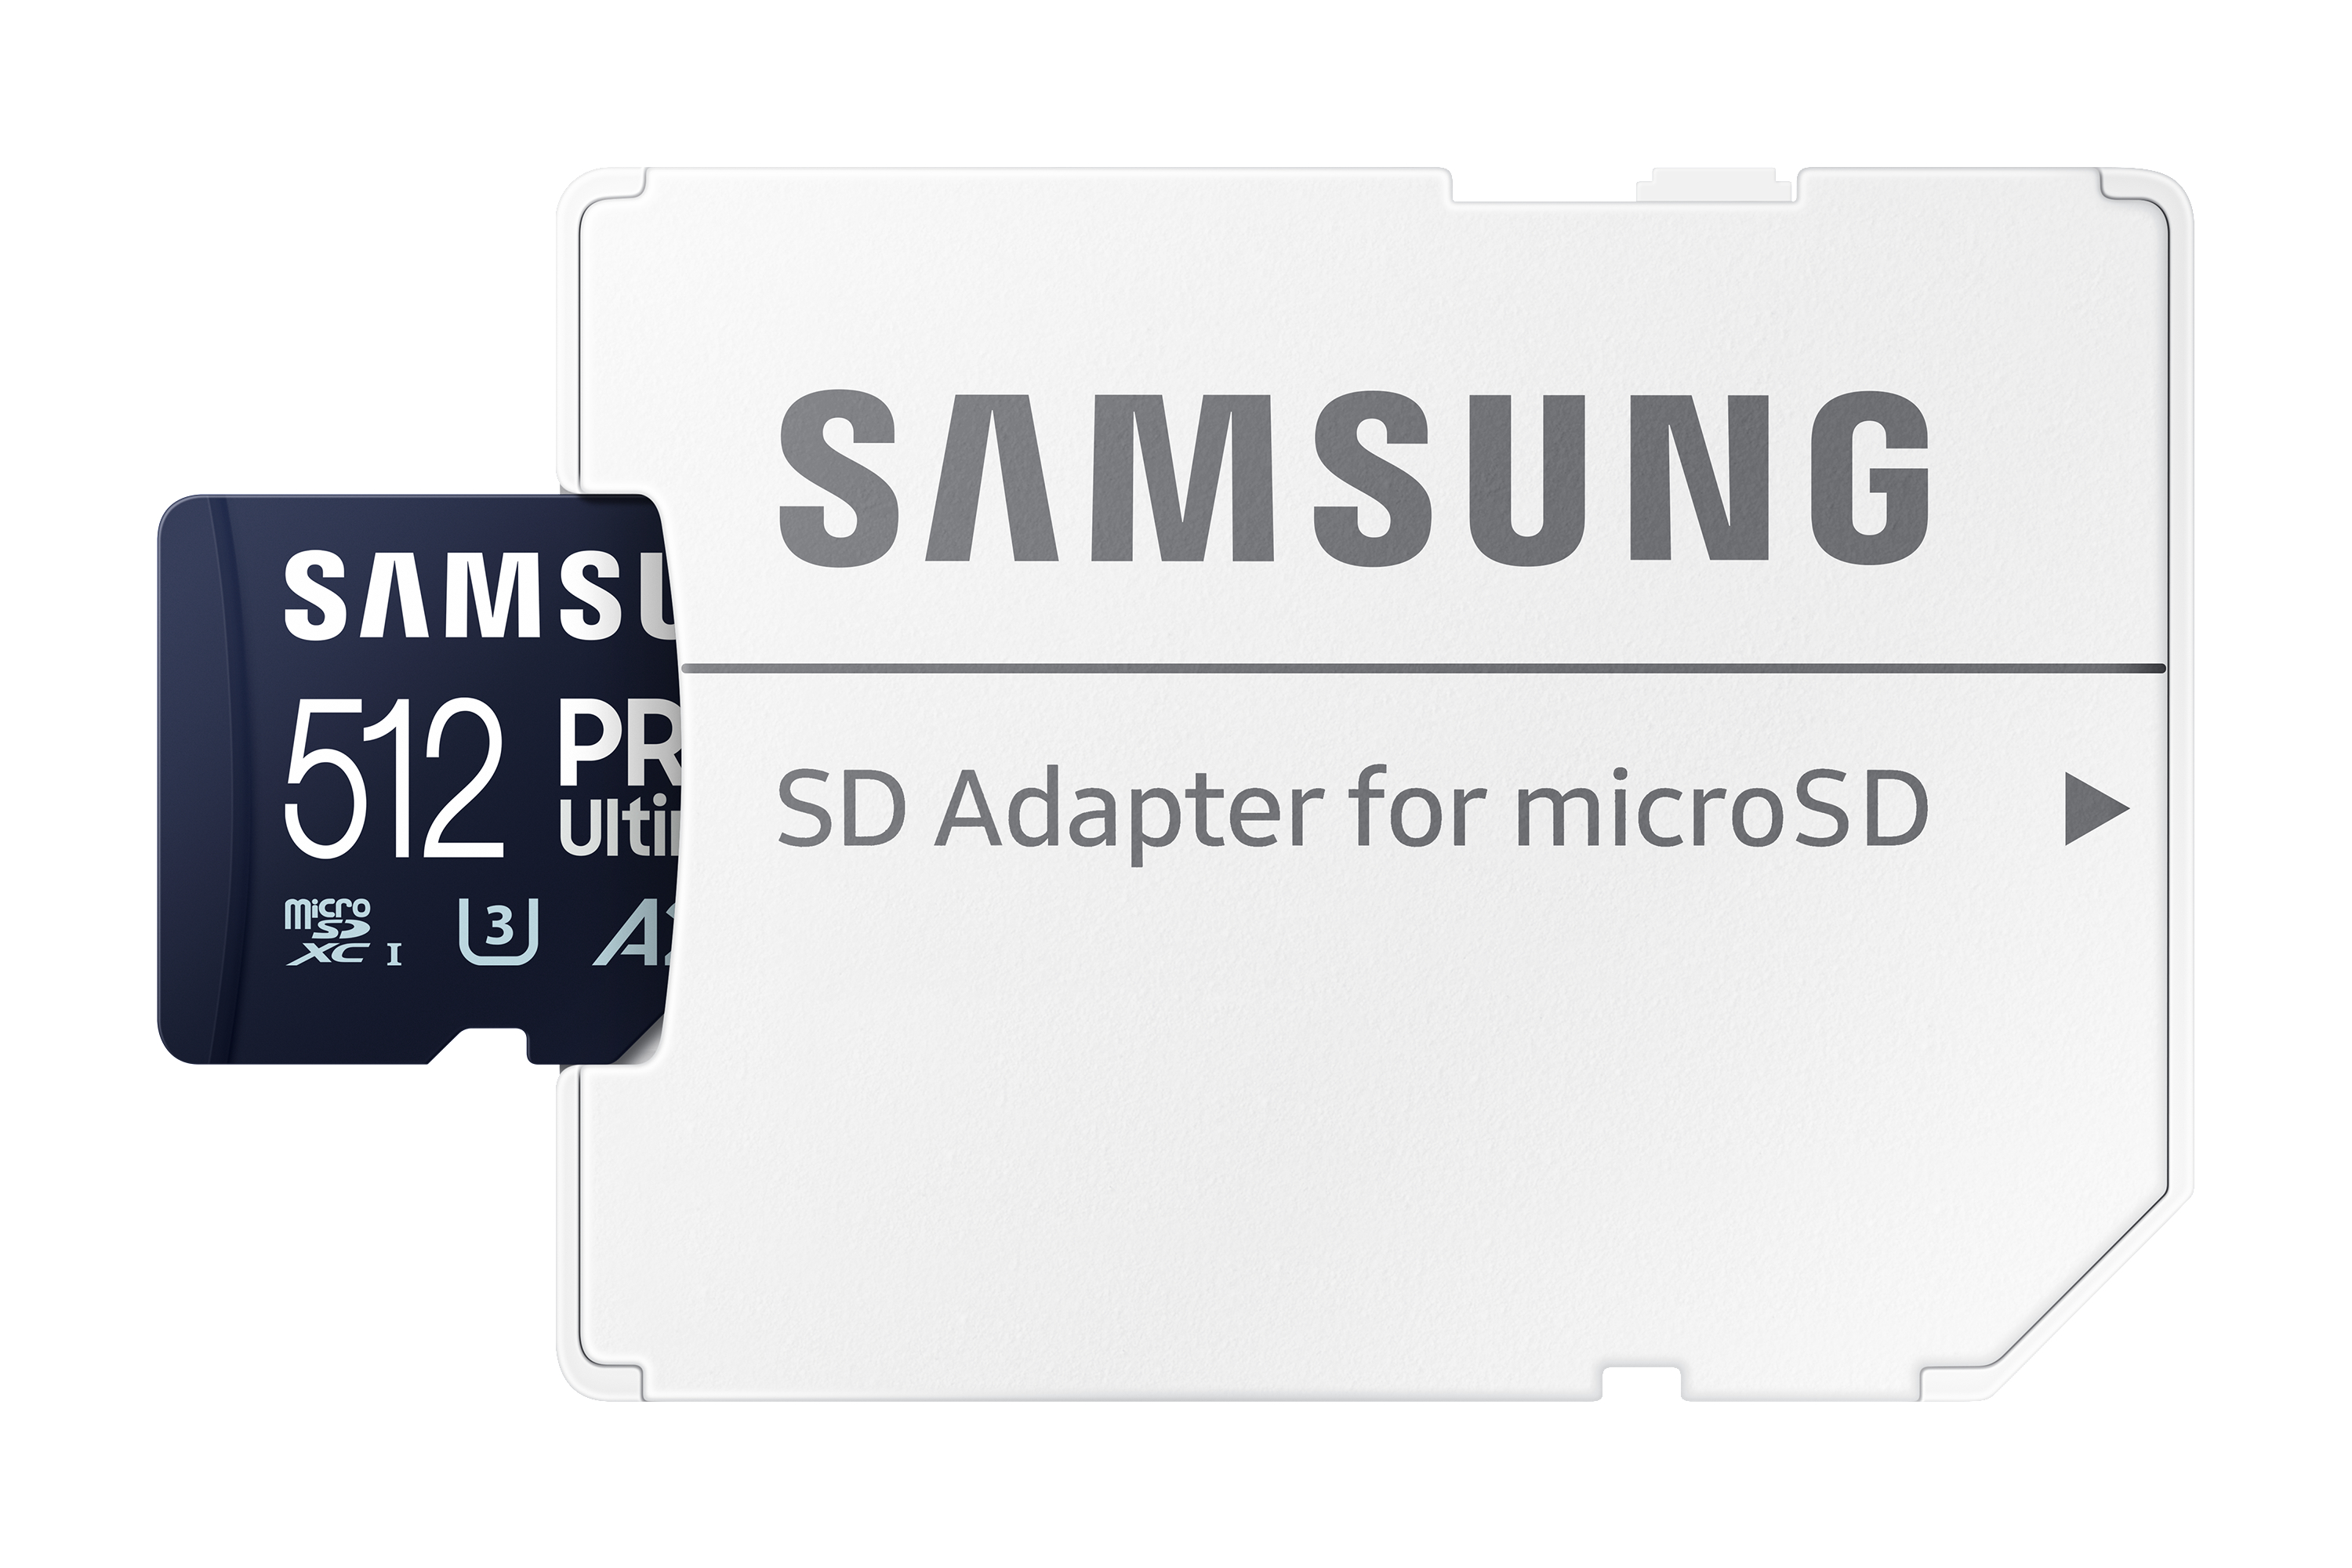 SAMSUNG PRO Ultimate, Micro-SD 512 200 Speicherkarte, GB, MB/s